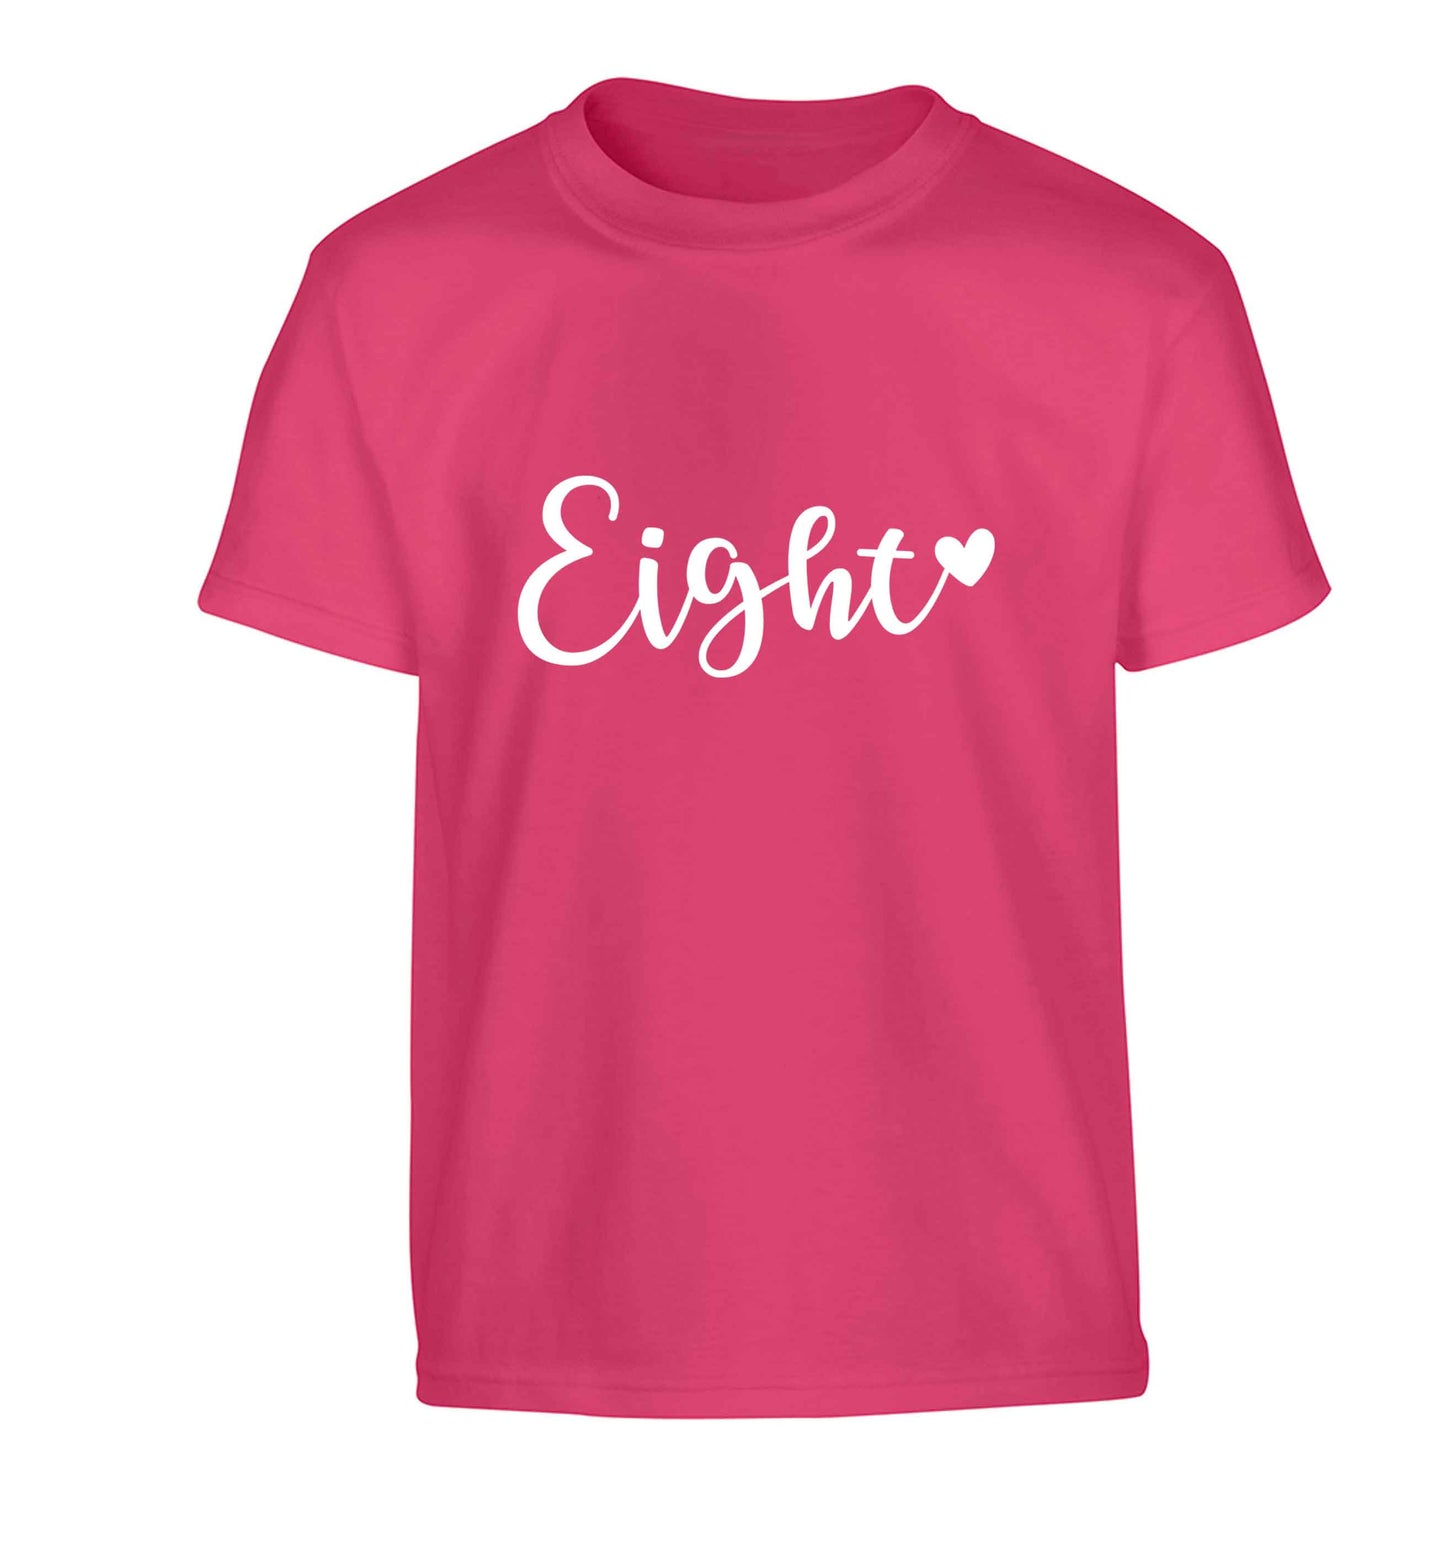 Eight and heart Children's pink Tshirt 12-13 Years